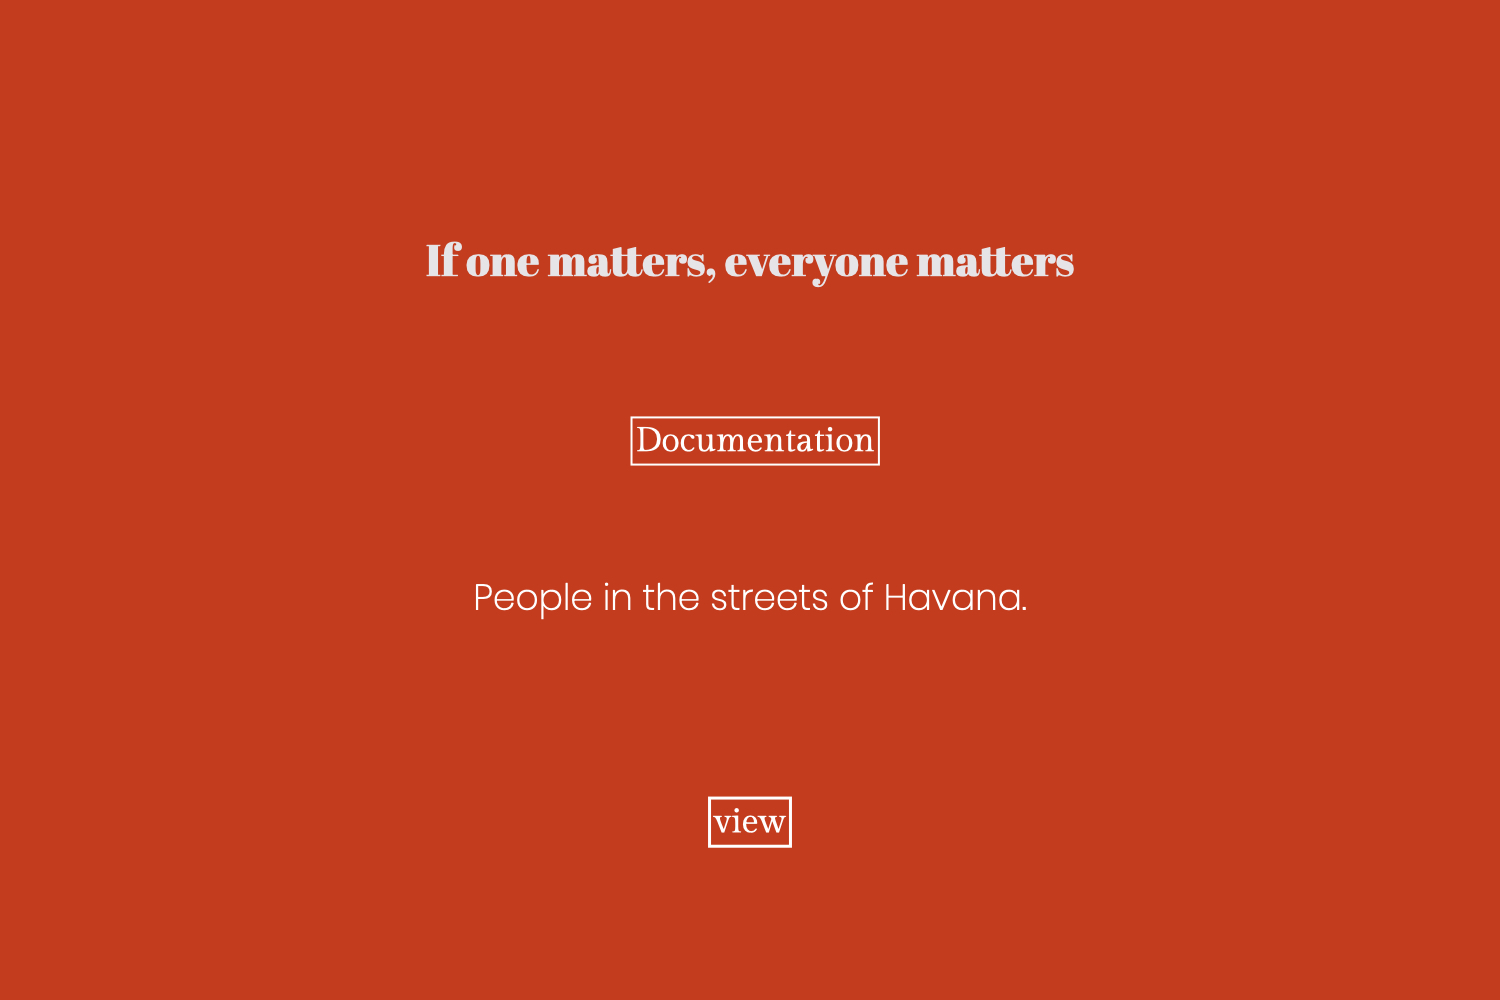 If one matters, everyone matters